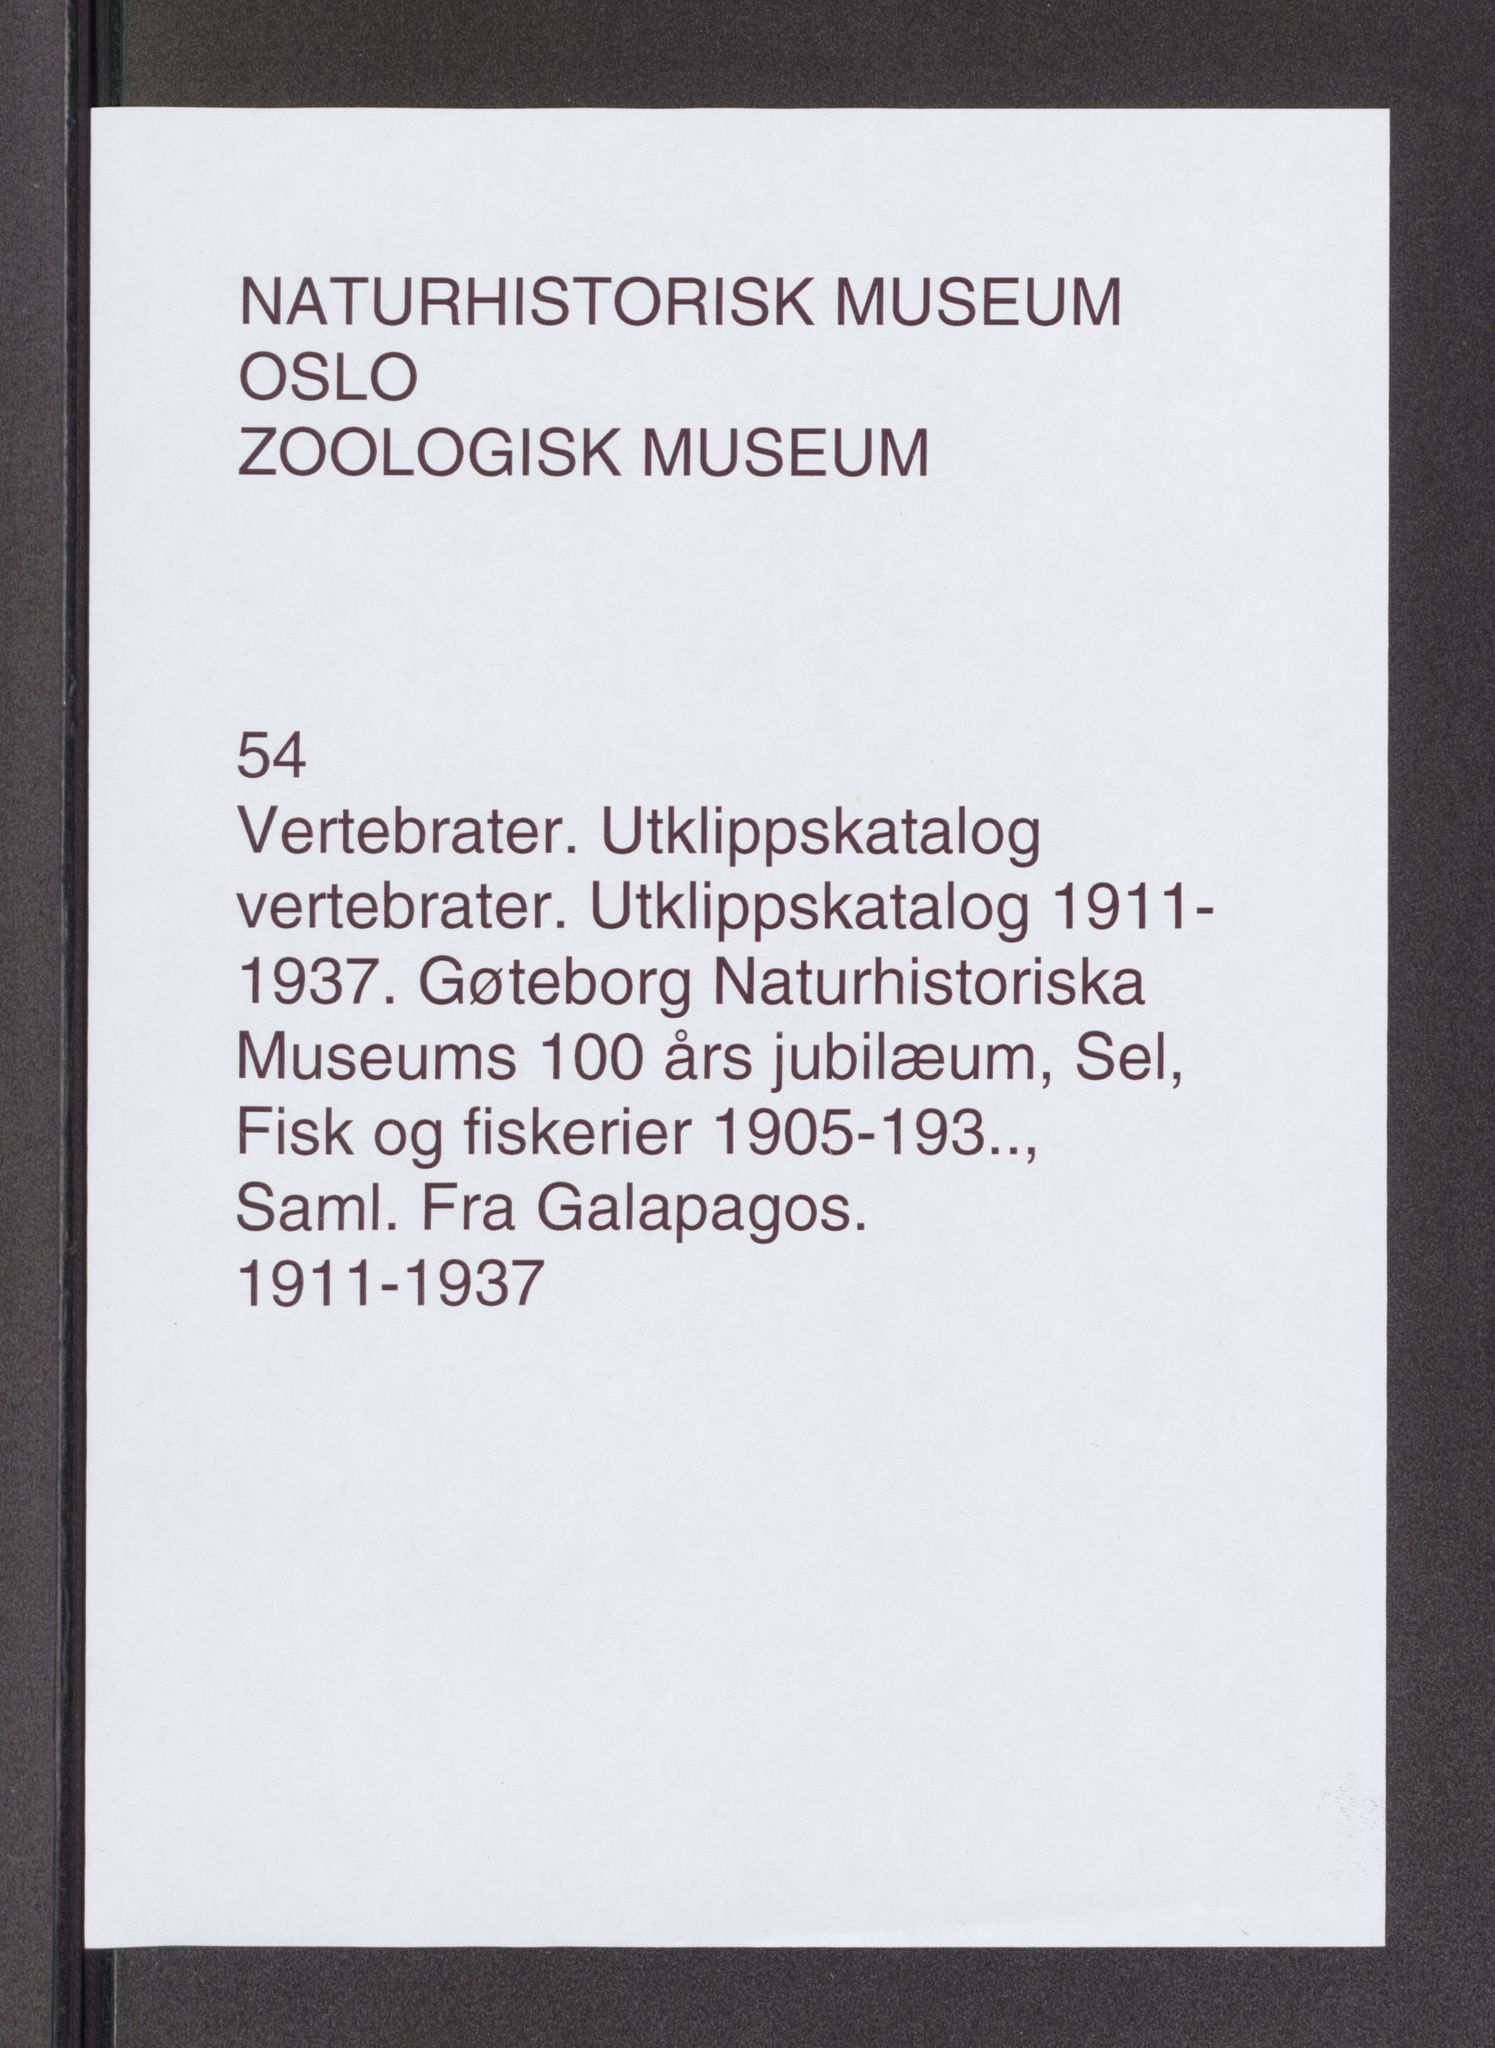 Naturhistorisk museum (Oslo), NHMO/-/5, 1911-1937